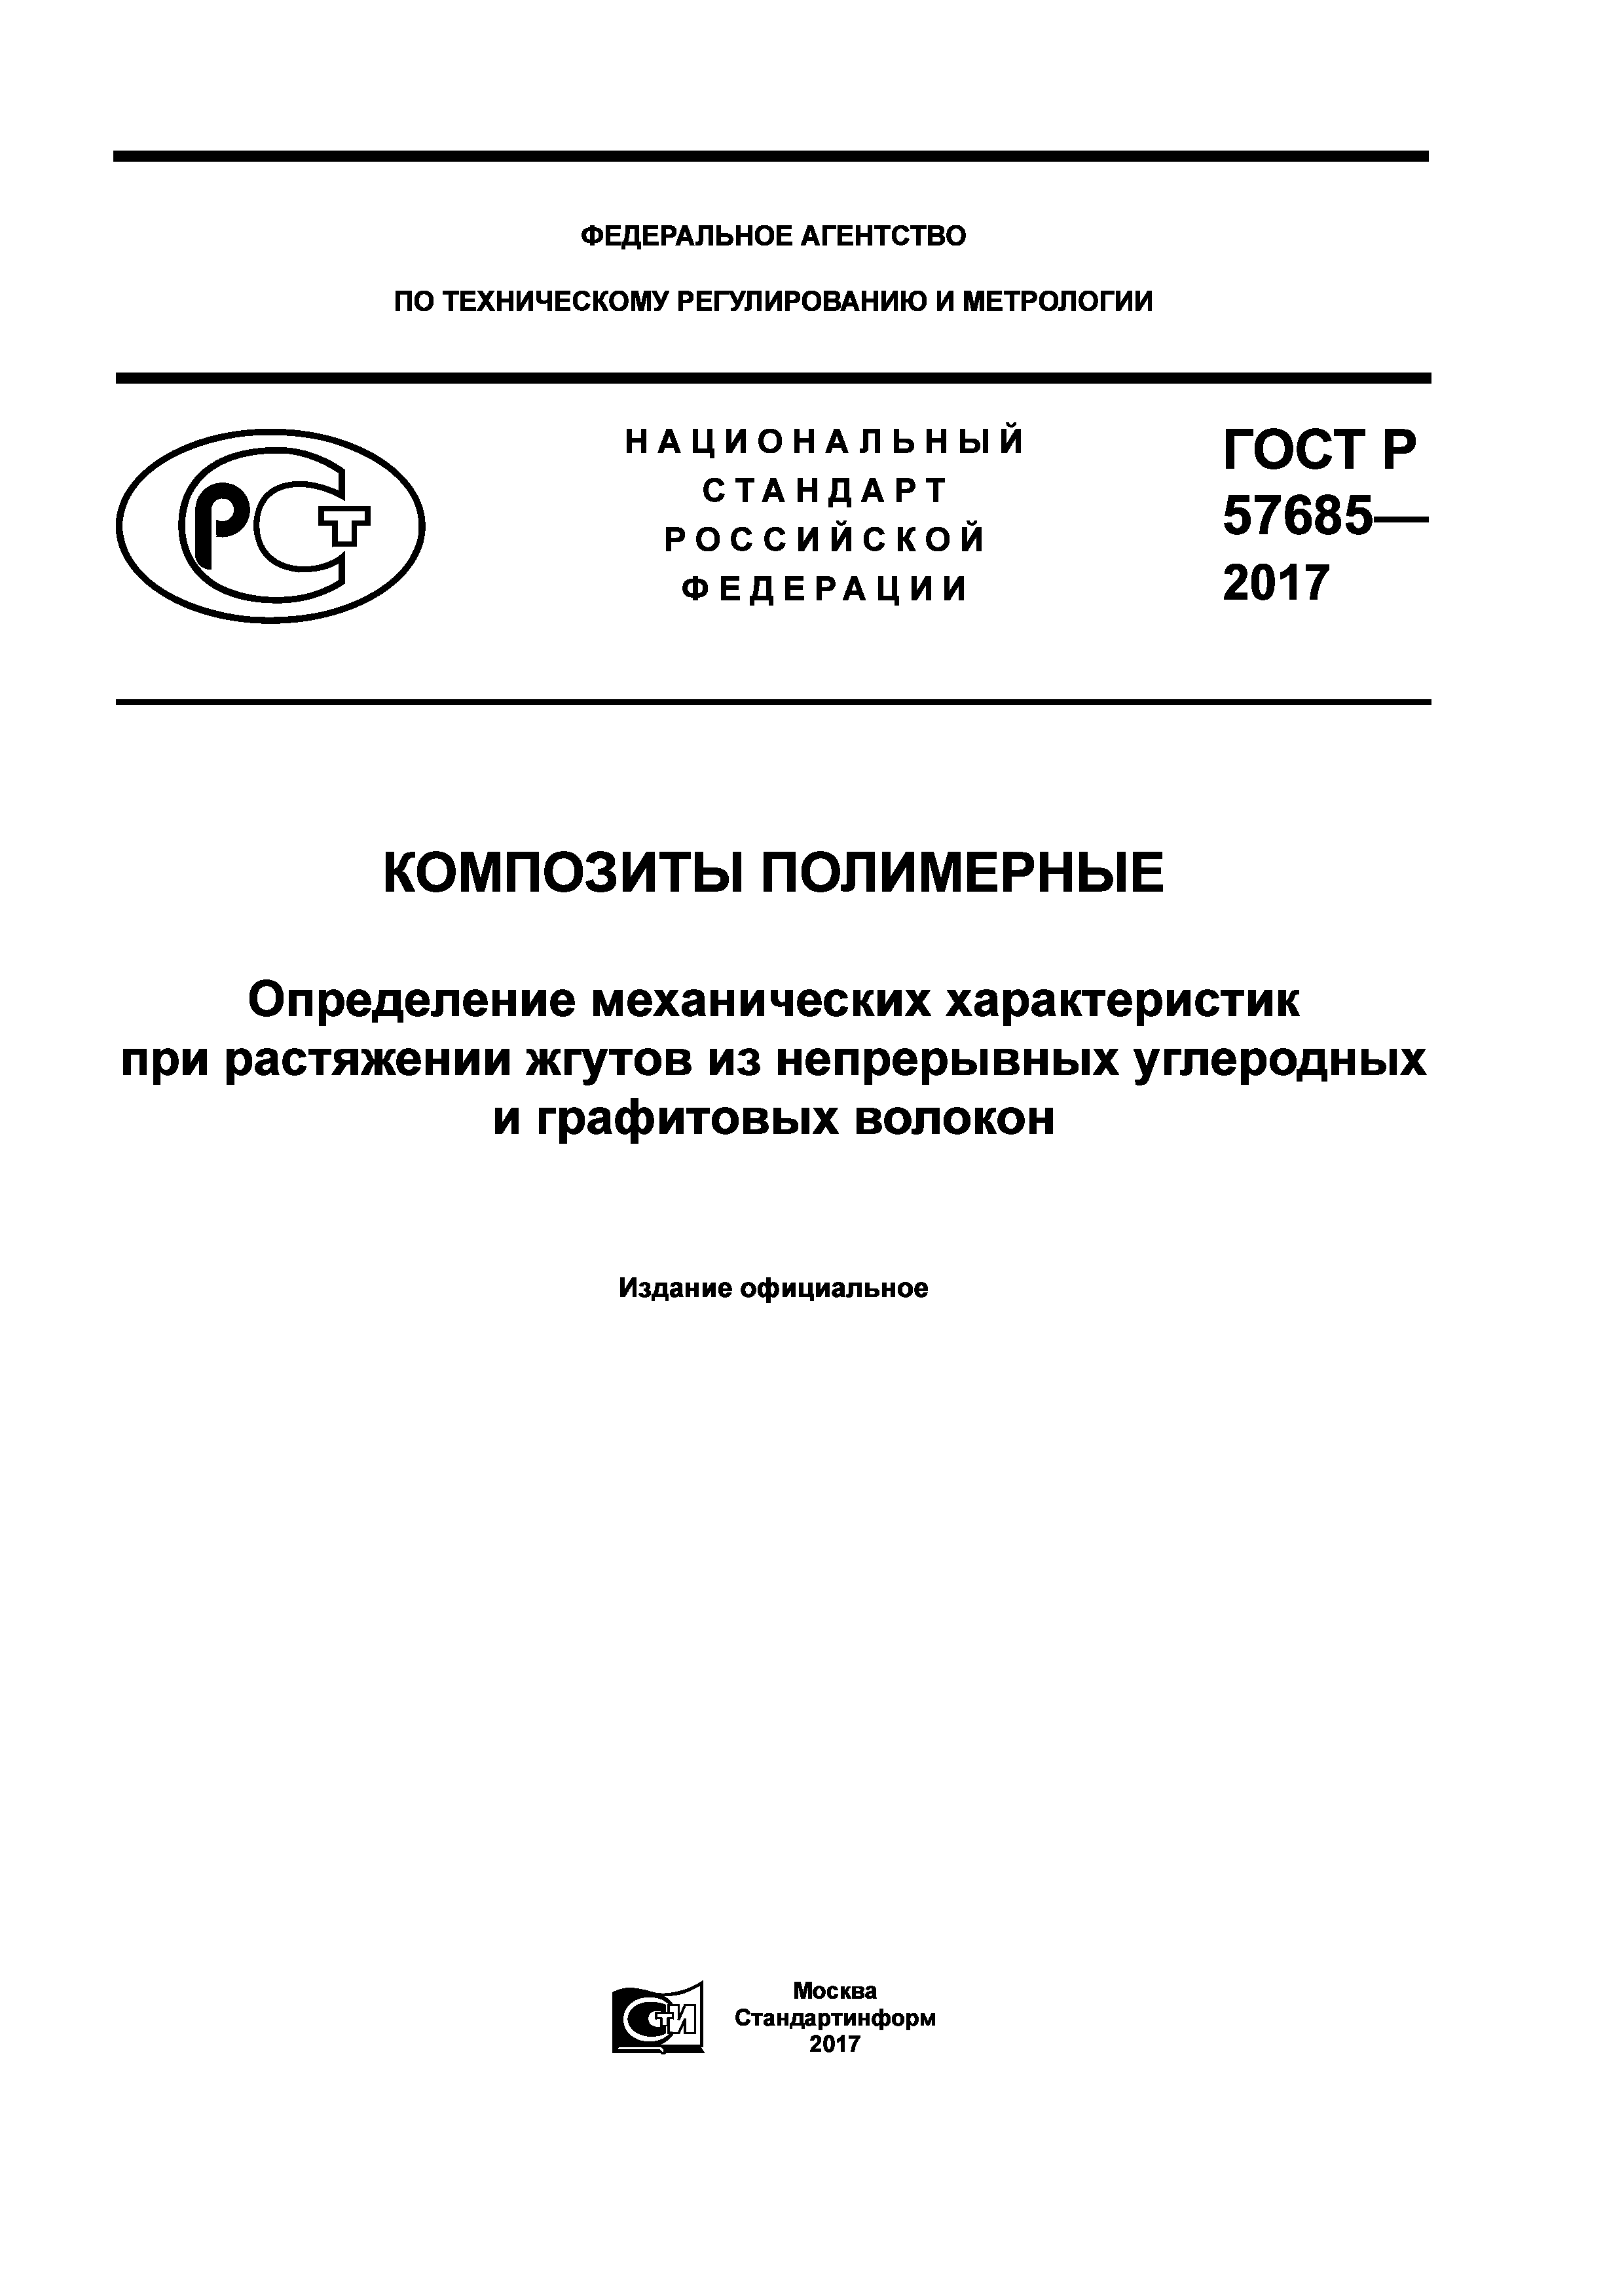 ГОСТ Р 57685-2017